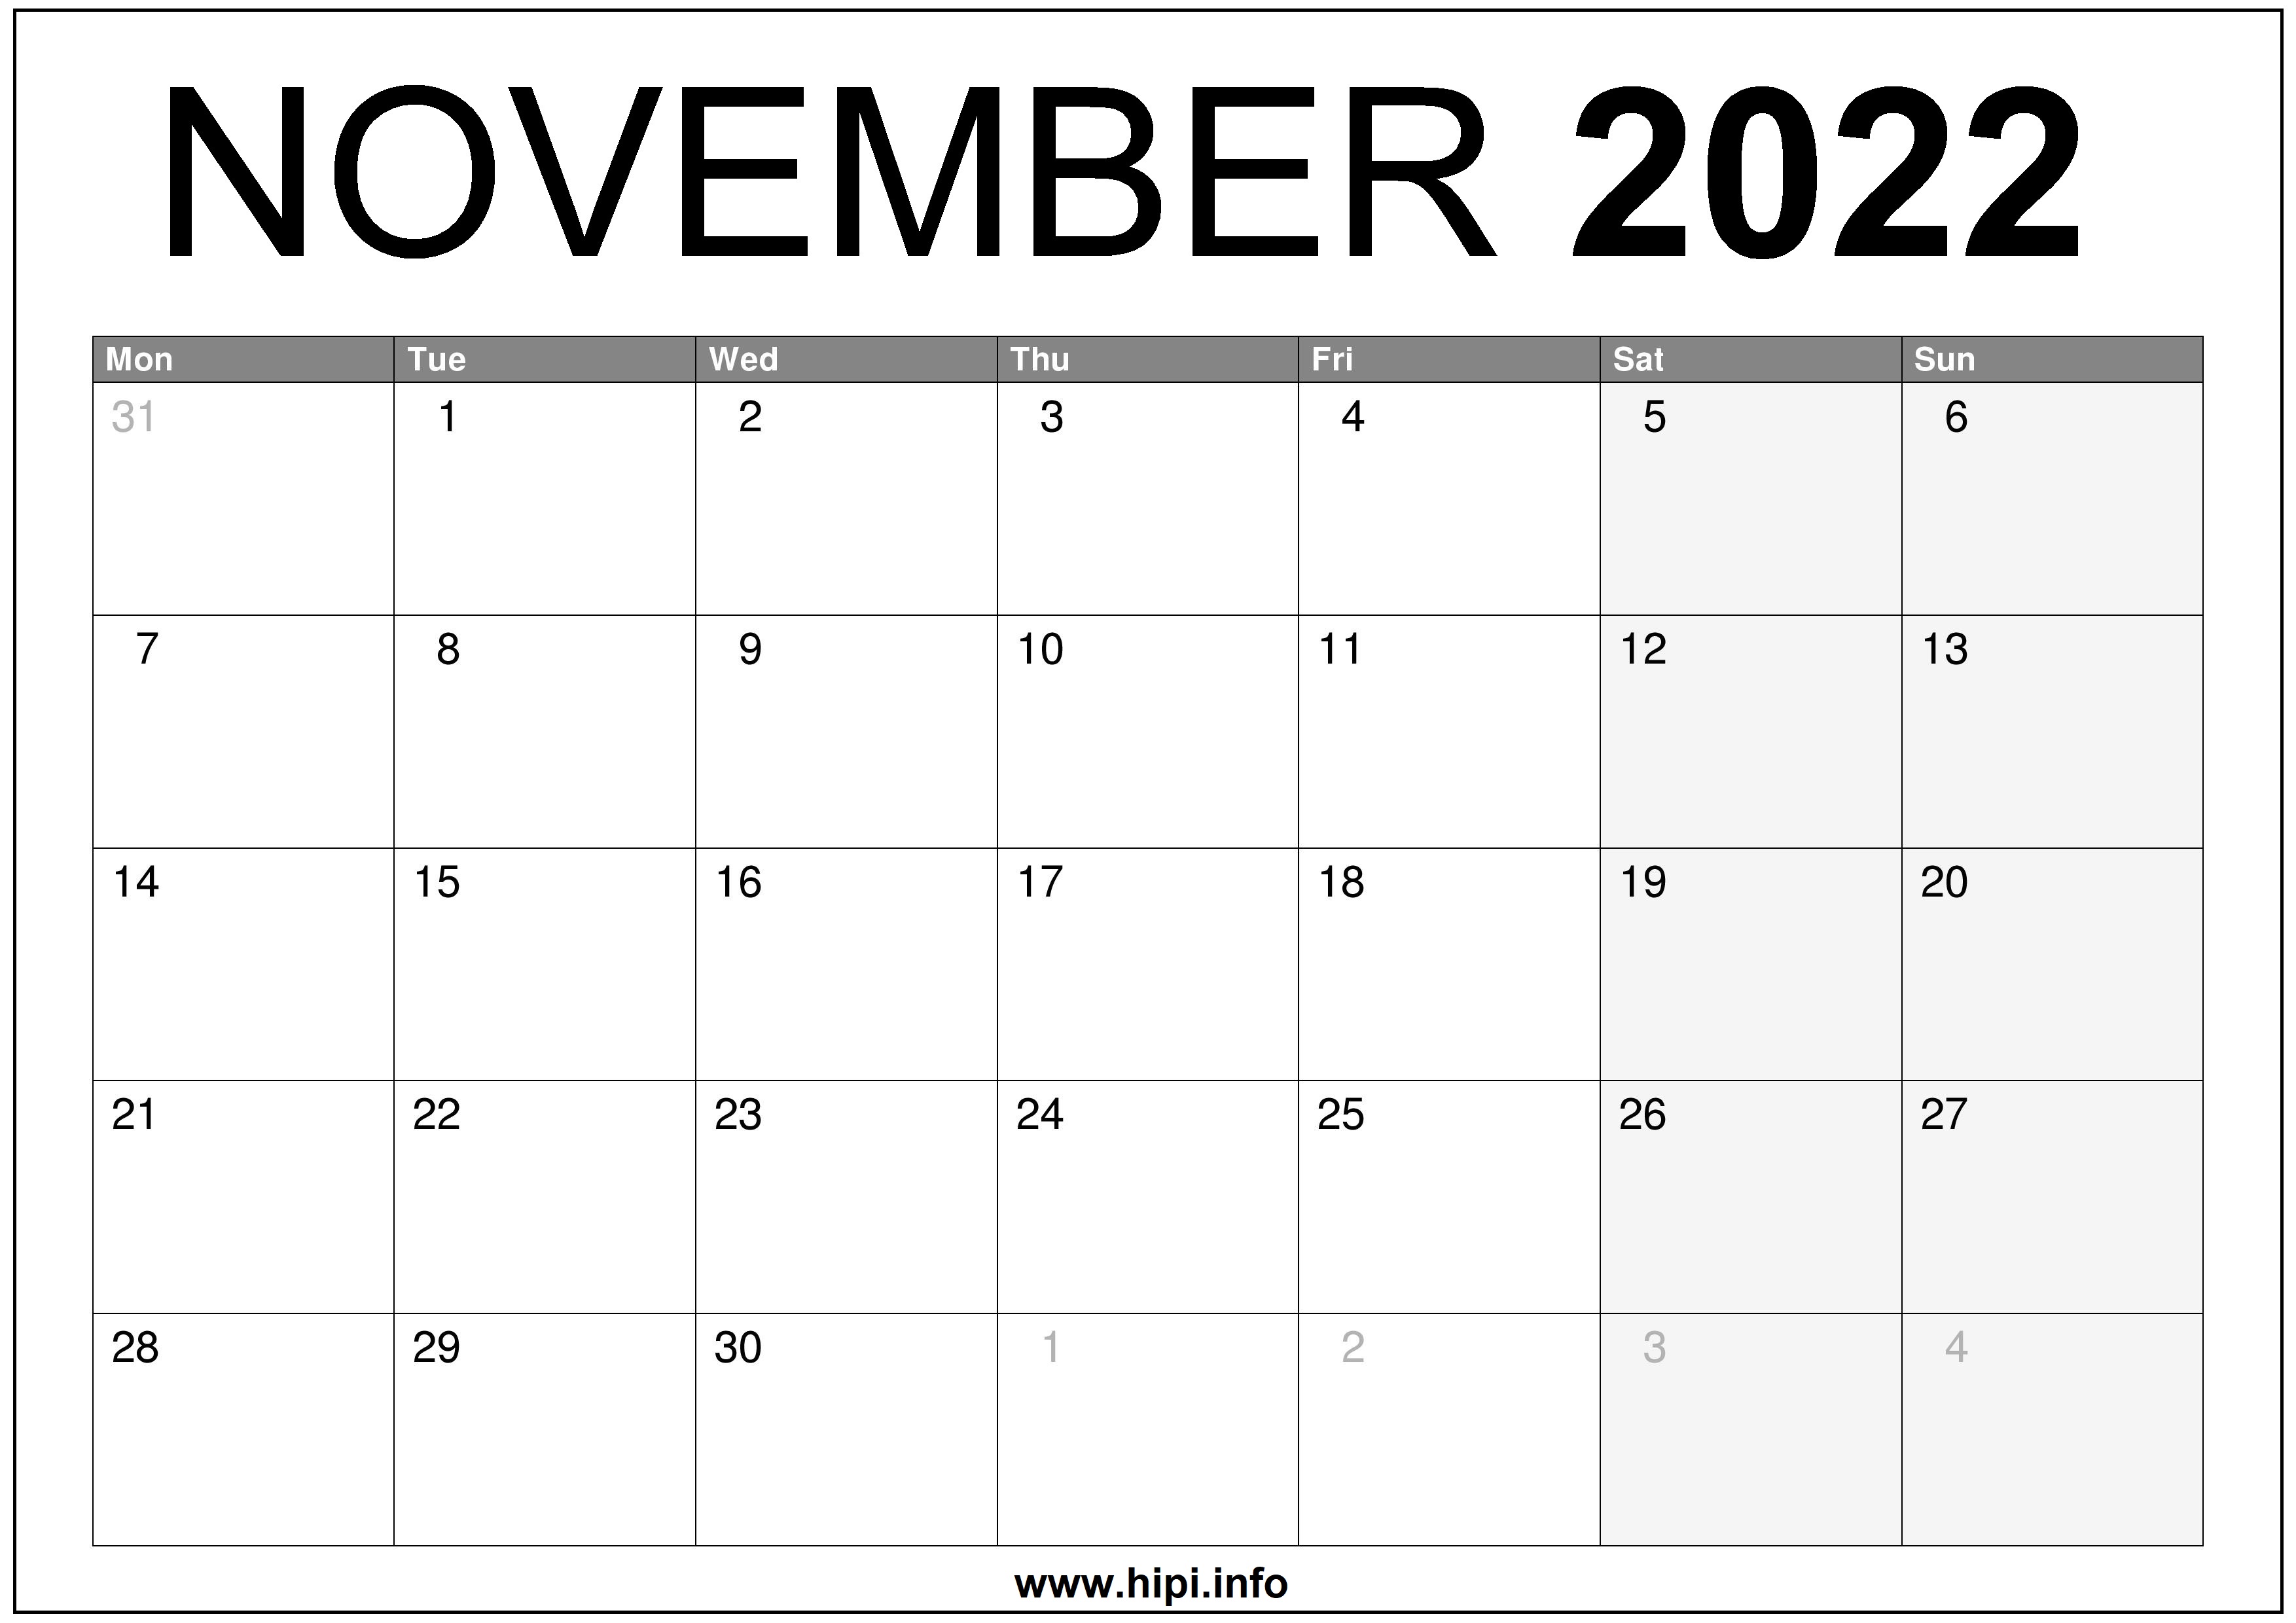 Nov 2022 Calendar Printable November 2022 Uk Calendar Printable Free - Hipi.info | Calendars Printable  Free